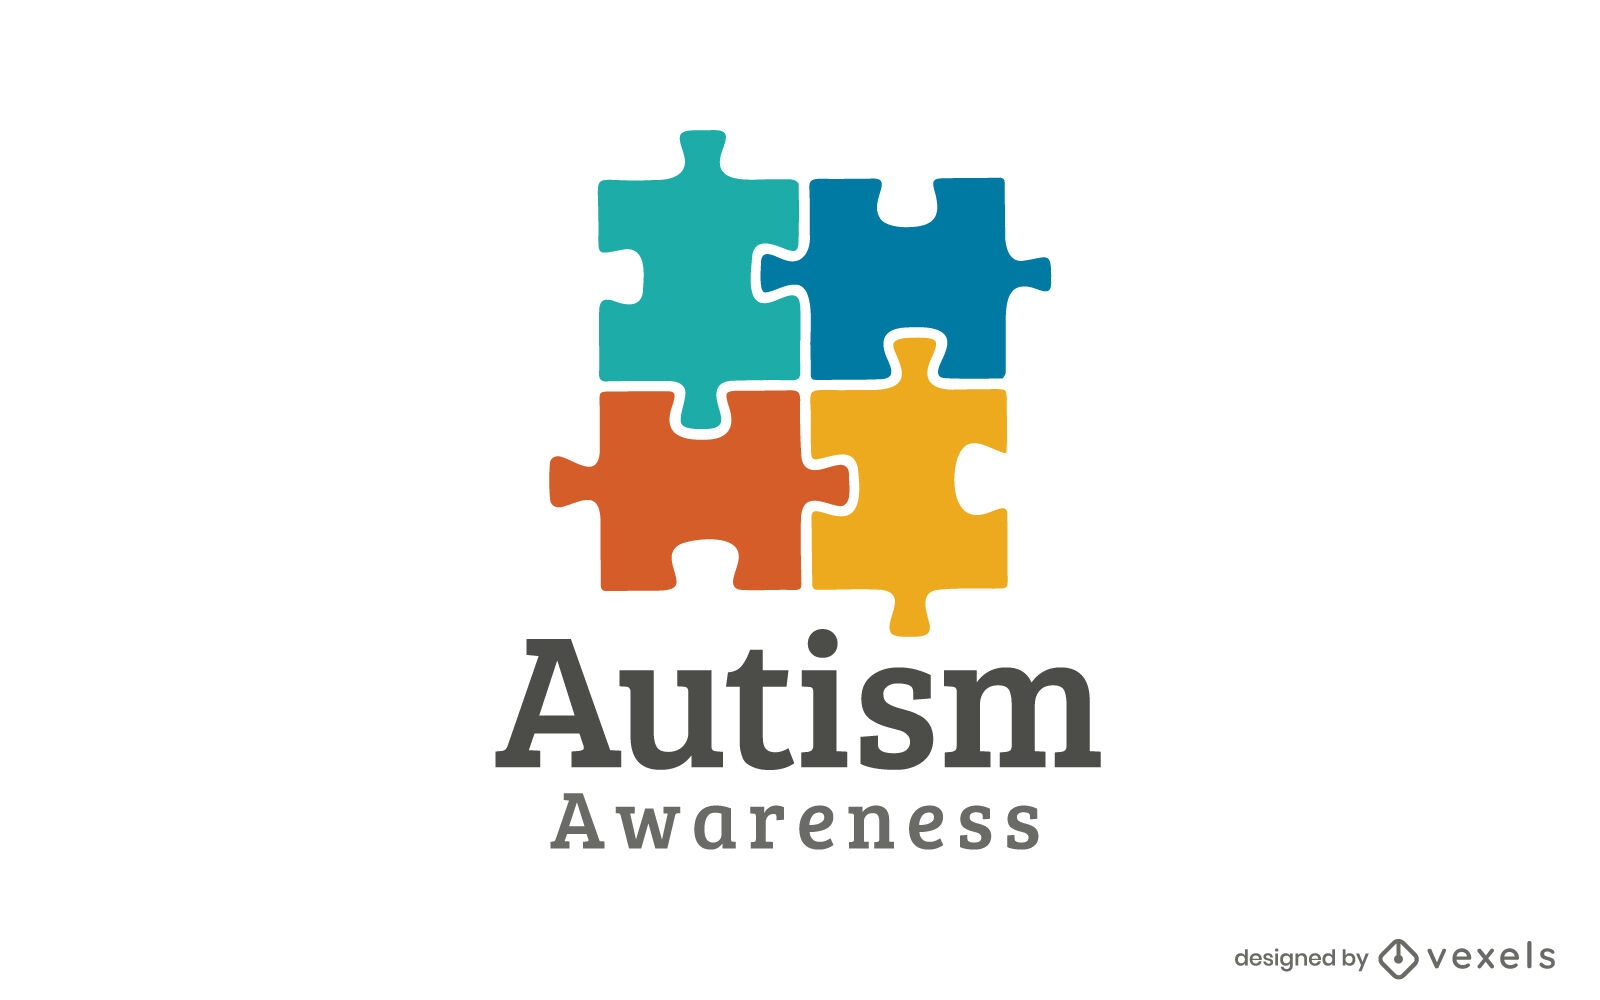 Autism Awareness Illustration